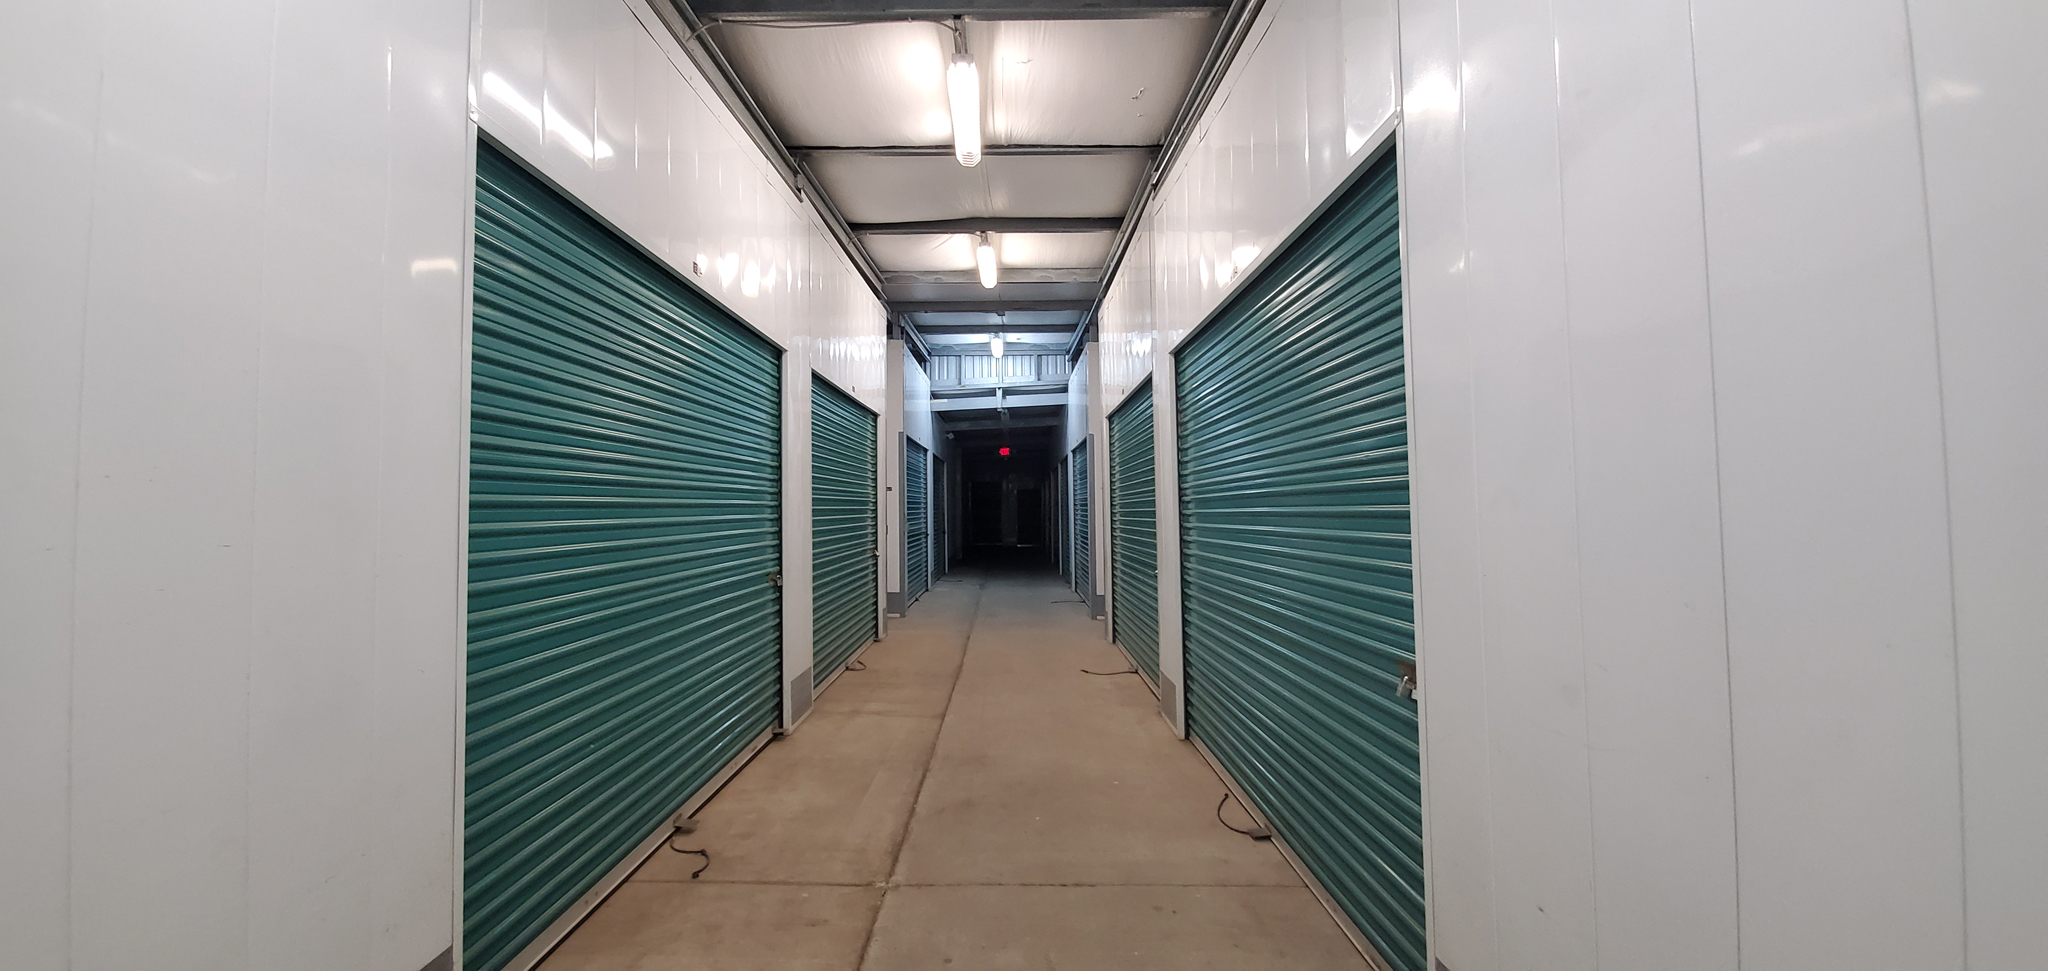 Hallway with interior storage units on both sides